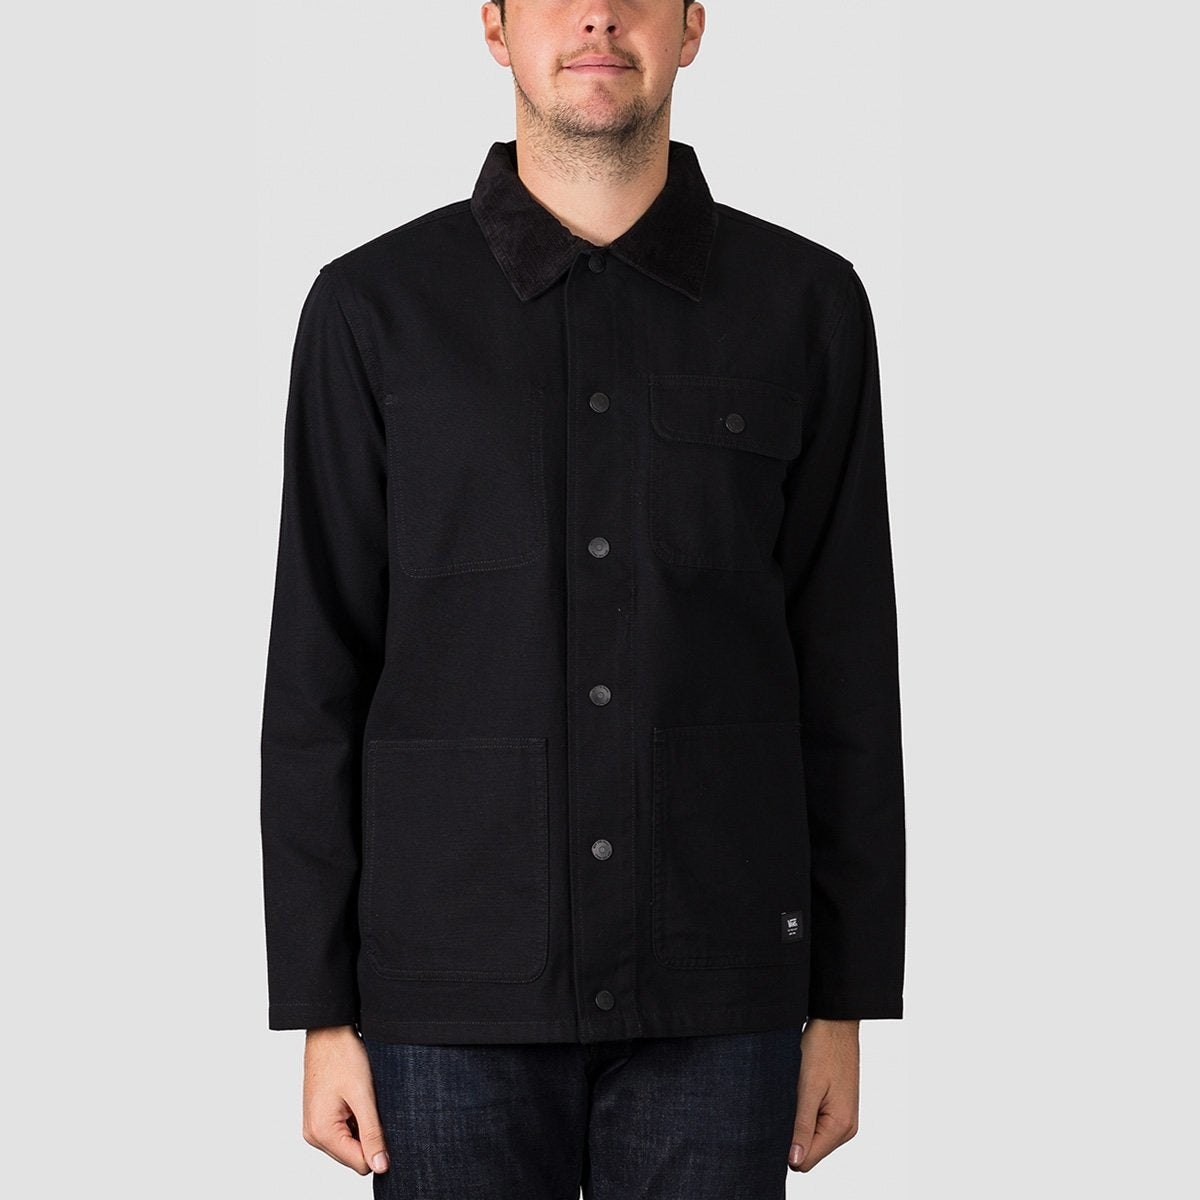 Vans Drill Chore Coat Jacket Black - Clothing